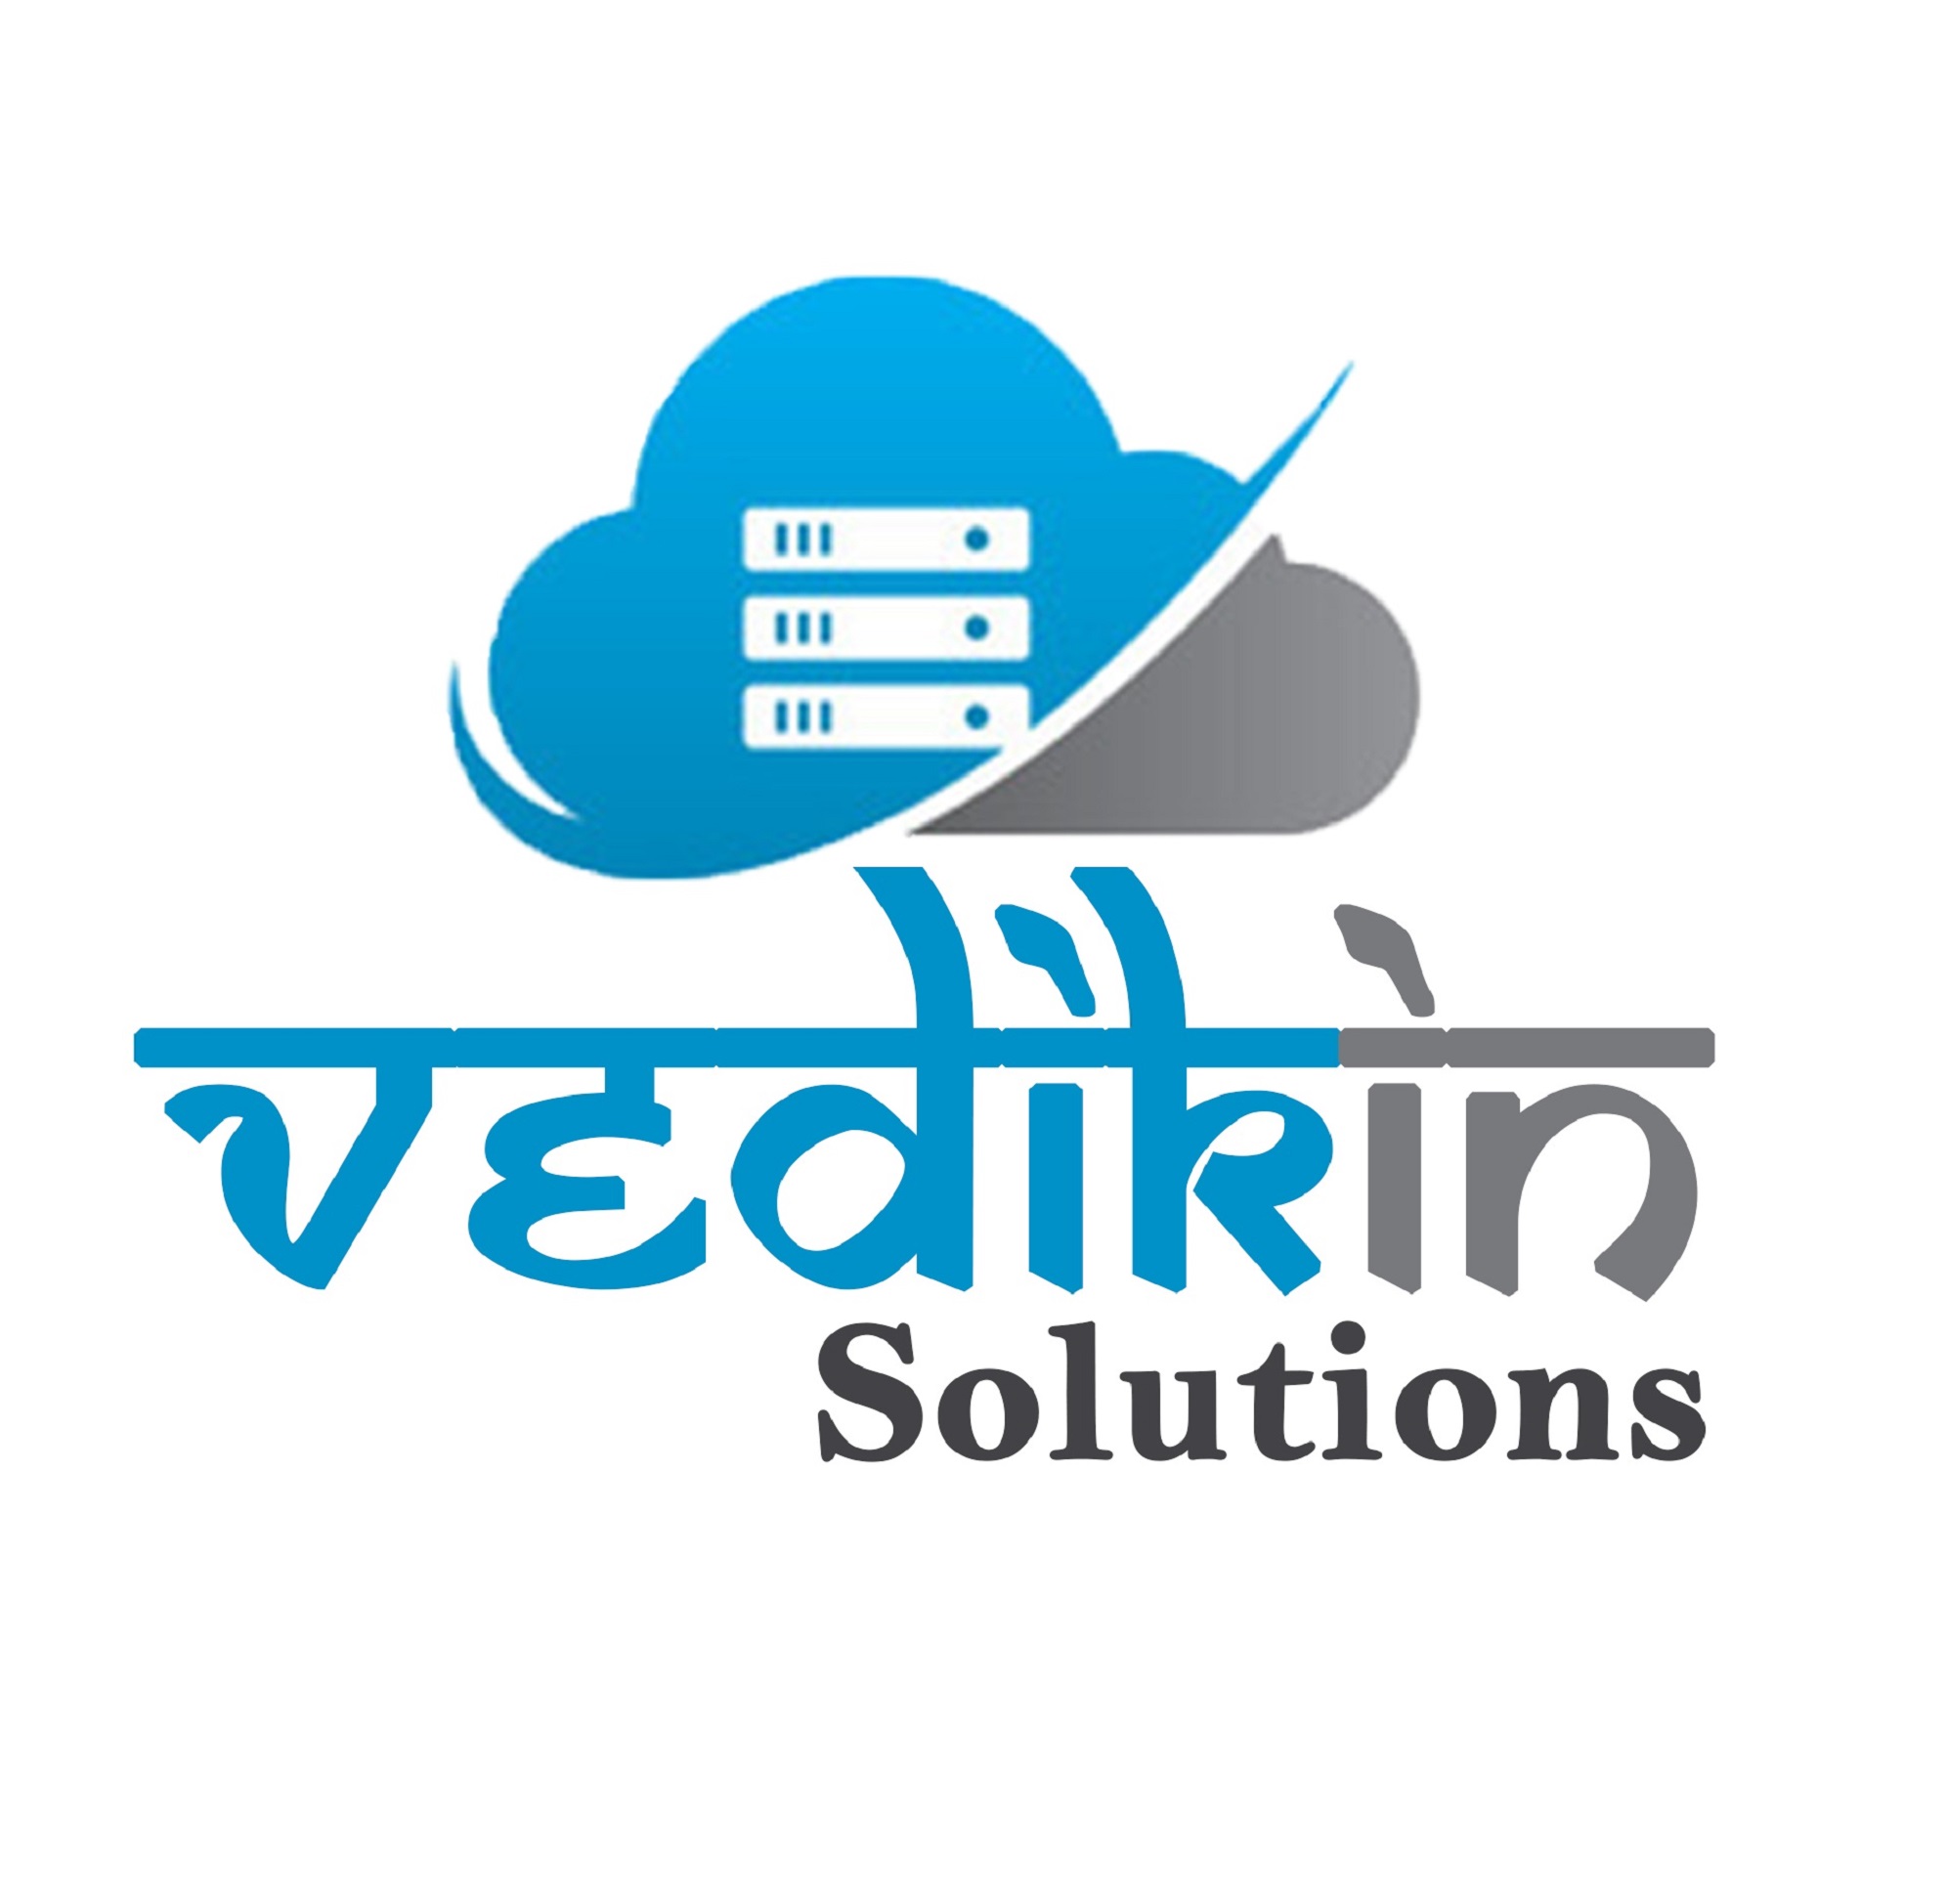 VedikIn Solutions